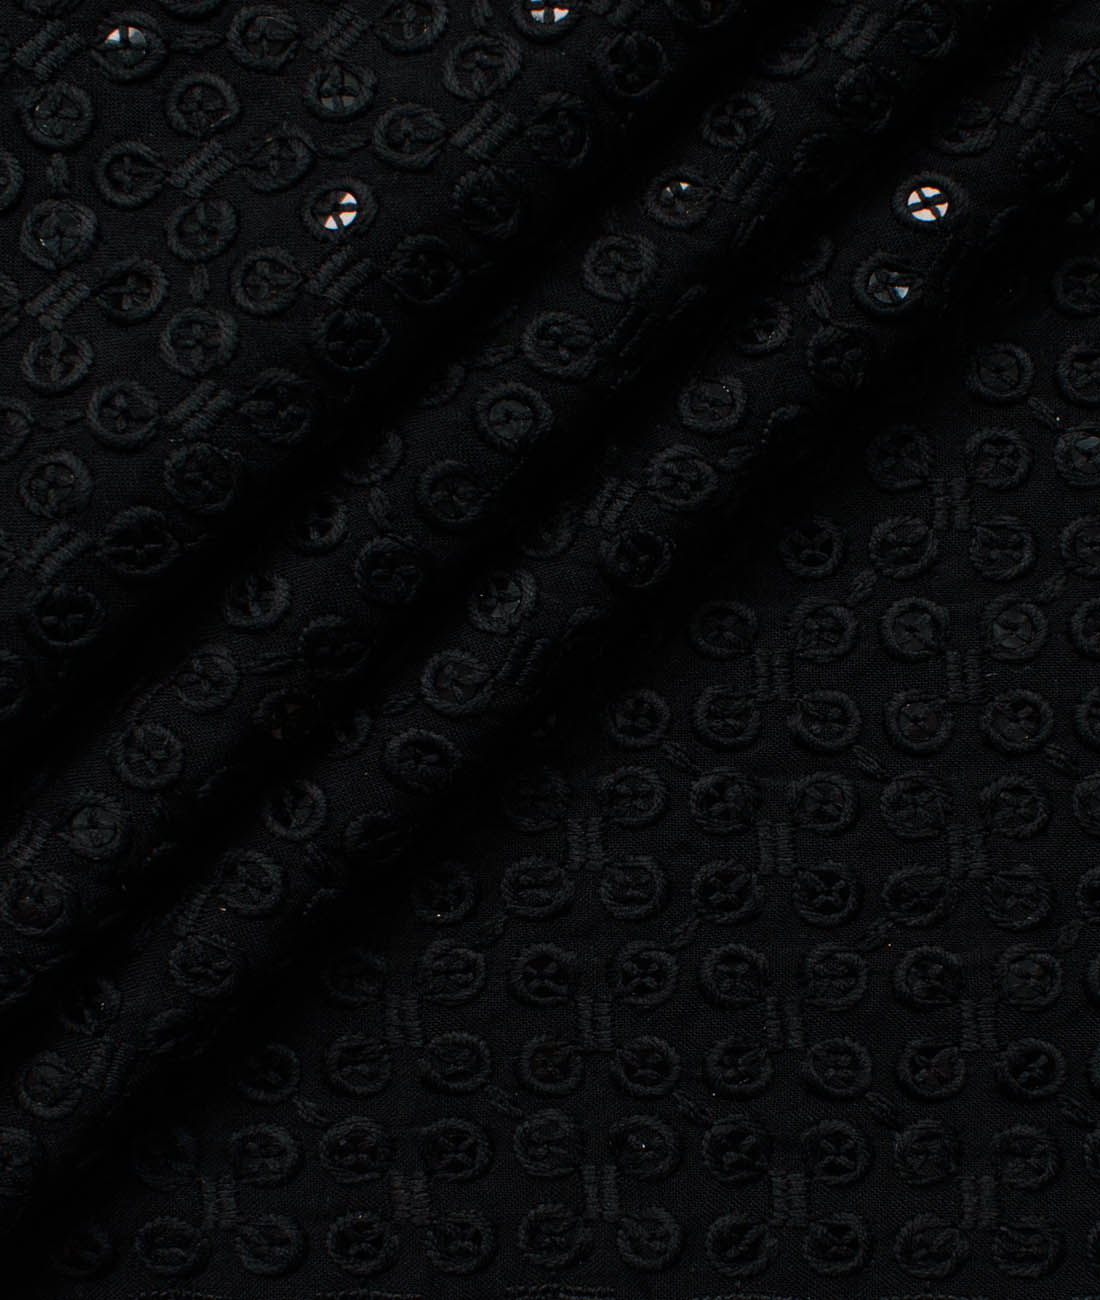 Nemesis Men's Cotton Embroidered  Unstitched Ethnic Kurta Fabric (Black)